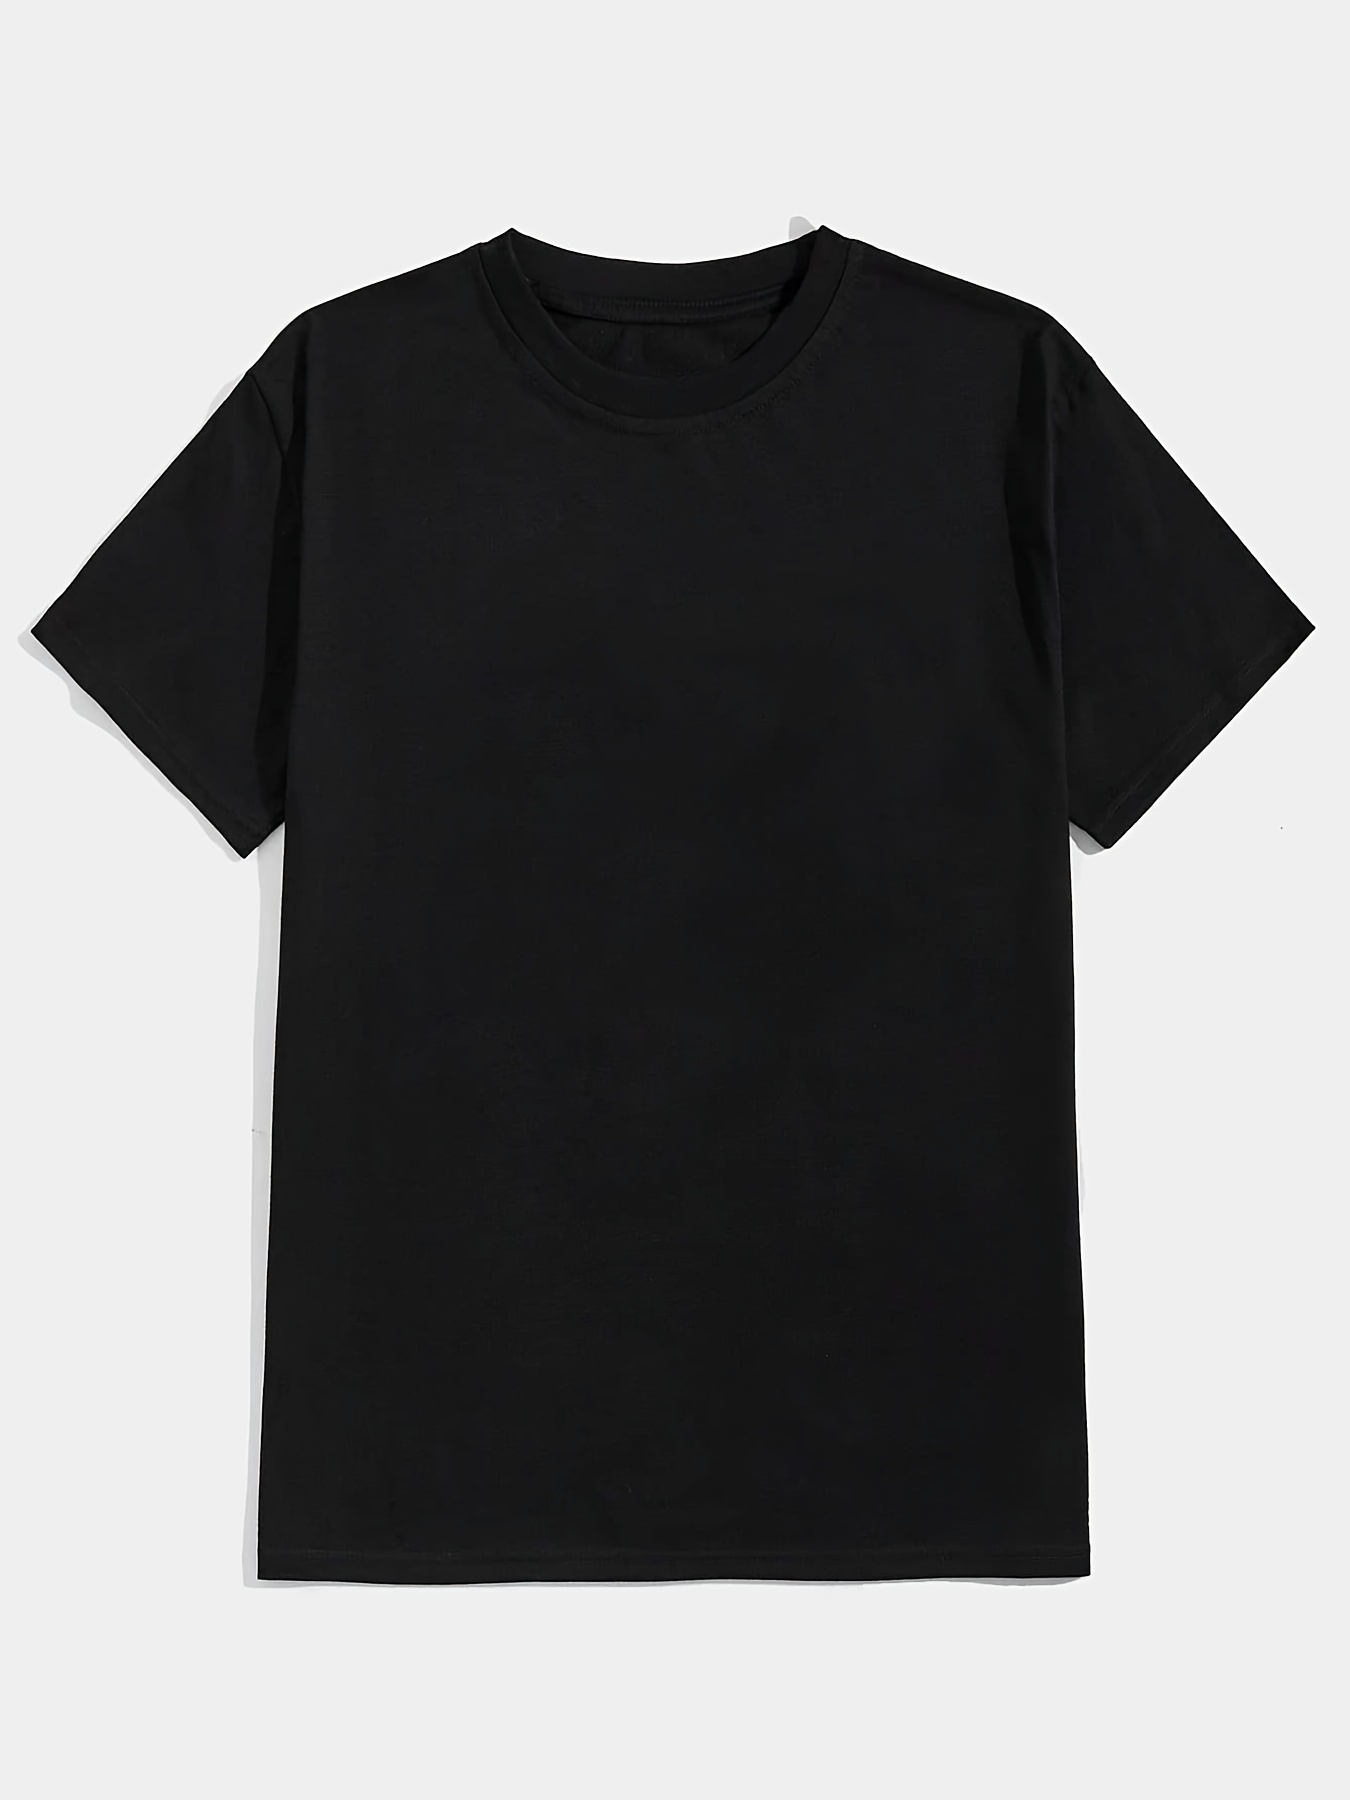 Camiseta de algodón para hombre, color liso, manga corta, 3 unidades,  camisetas de verano para hombre